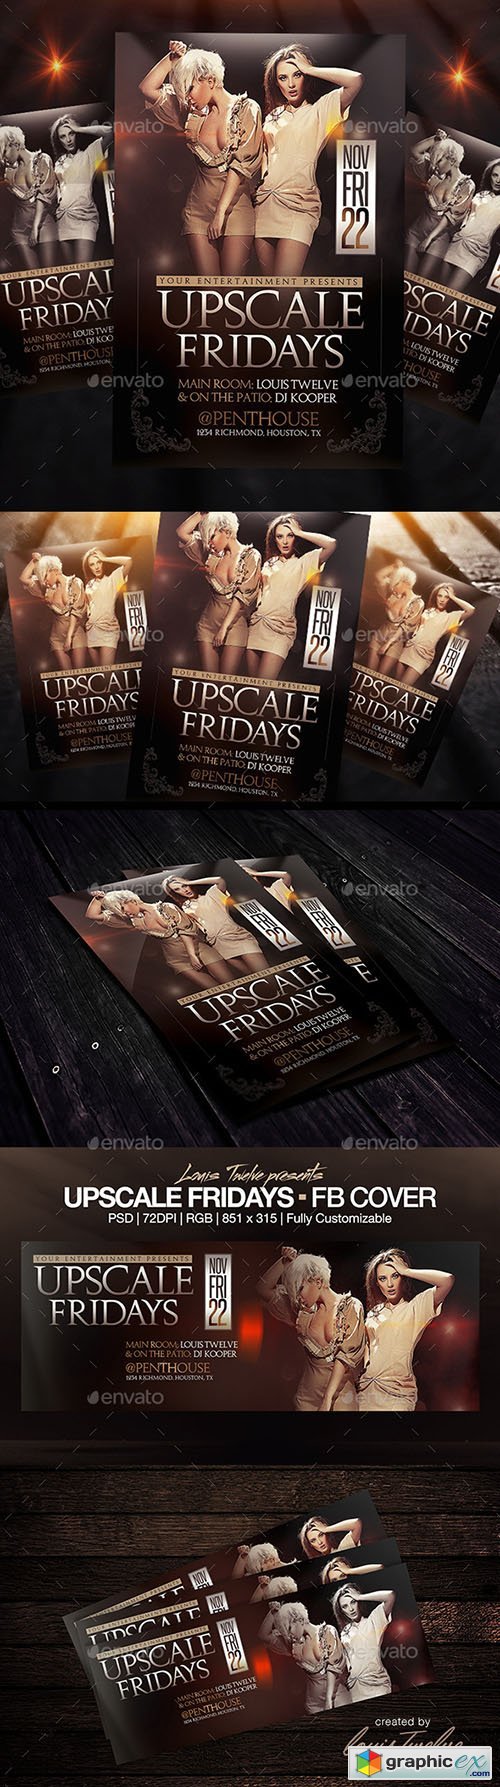 Upscale Fridays | Flyer